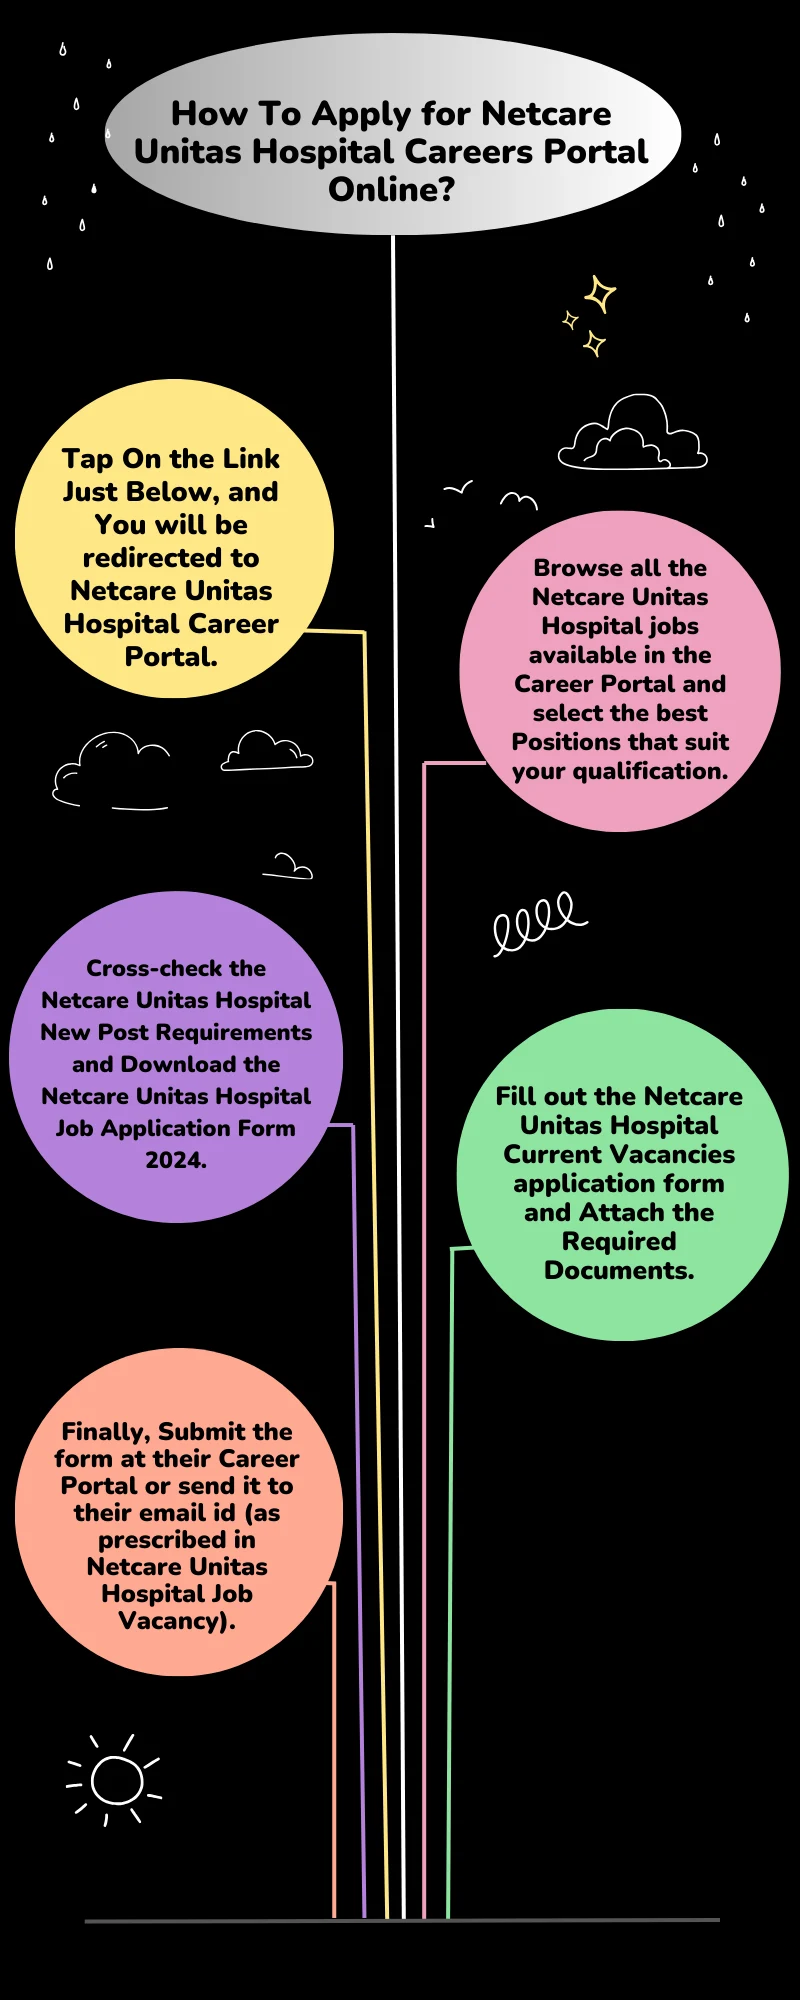 How To Apply for Netcare Unitas Hospital Careers Portal Online?